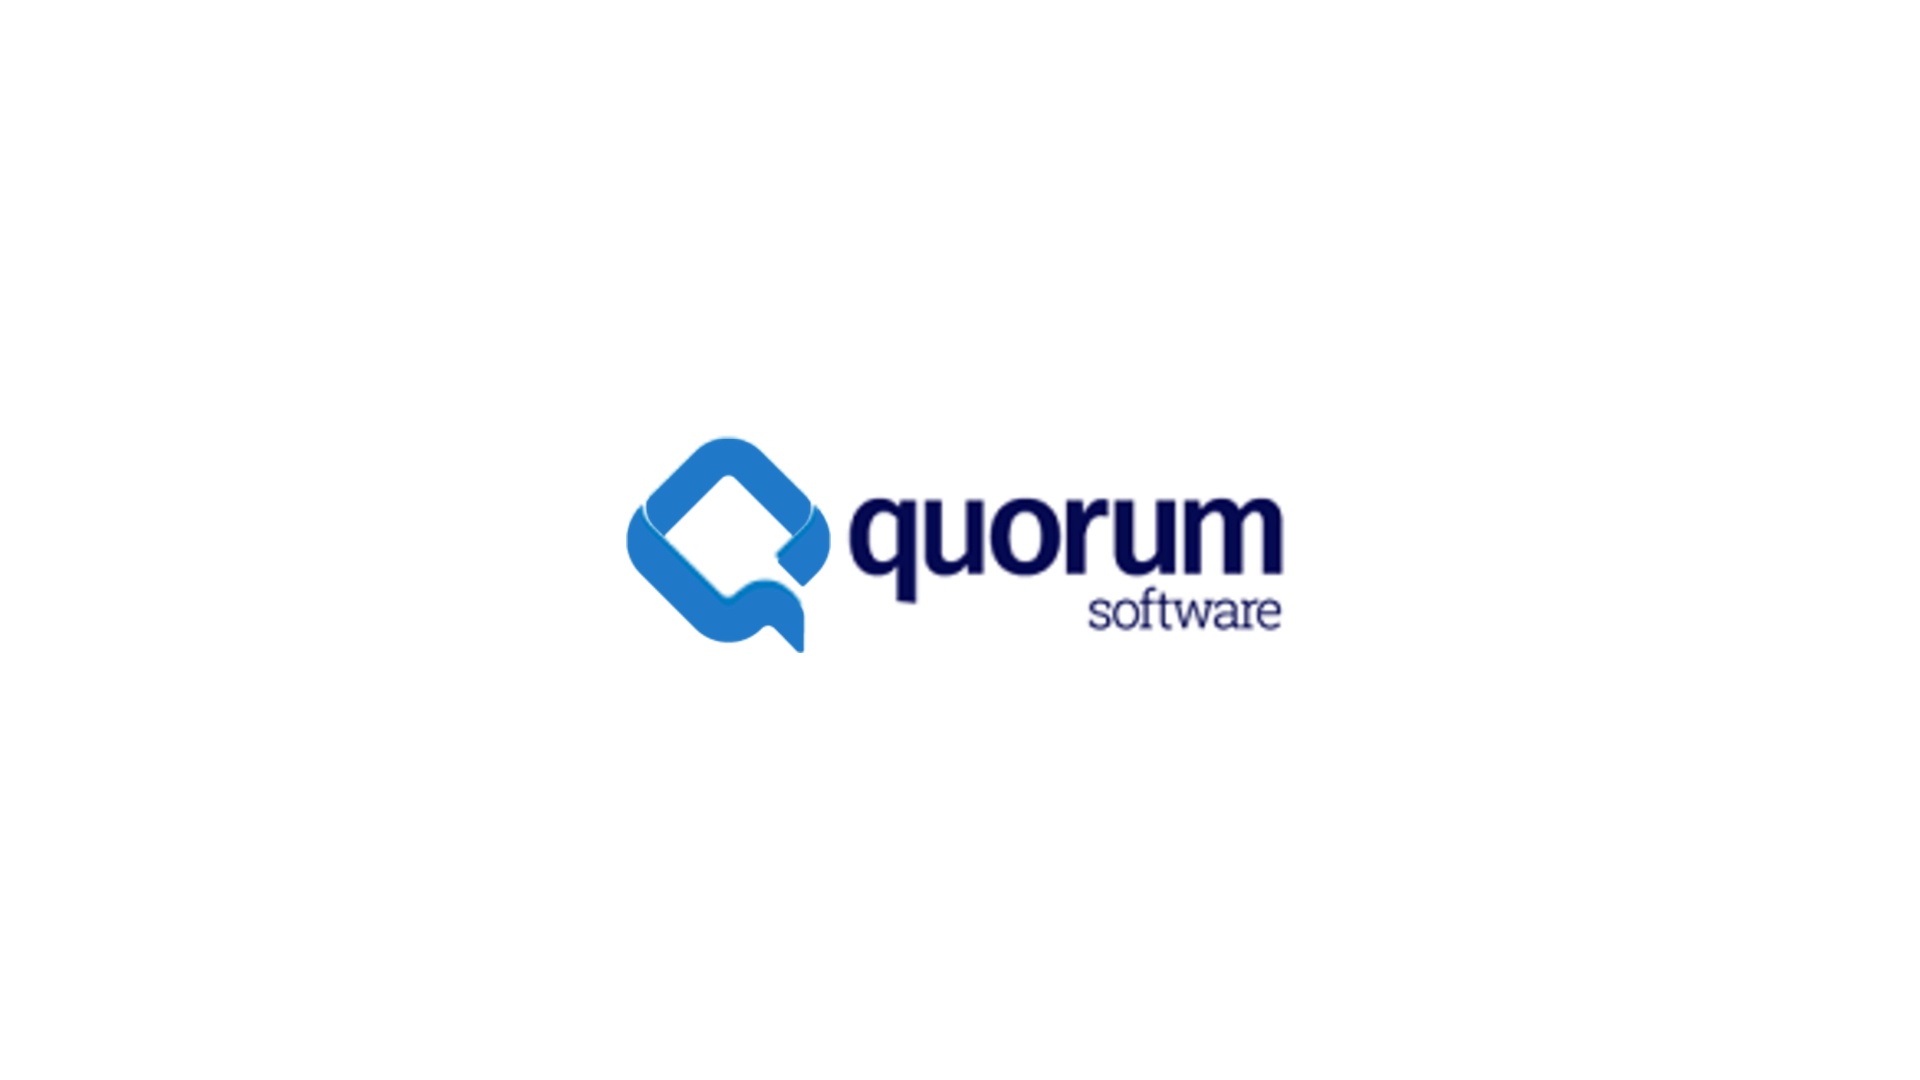 Quorum Software Completes Acquisition of Coastal Flow Measurement, Inc. and Flow-Cal, Inc.